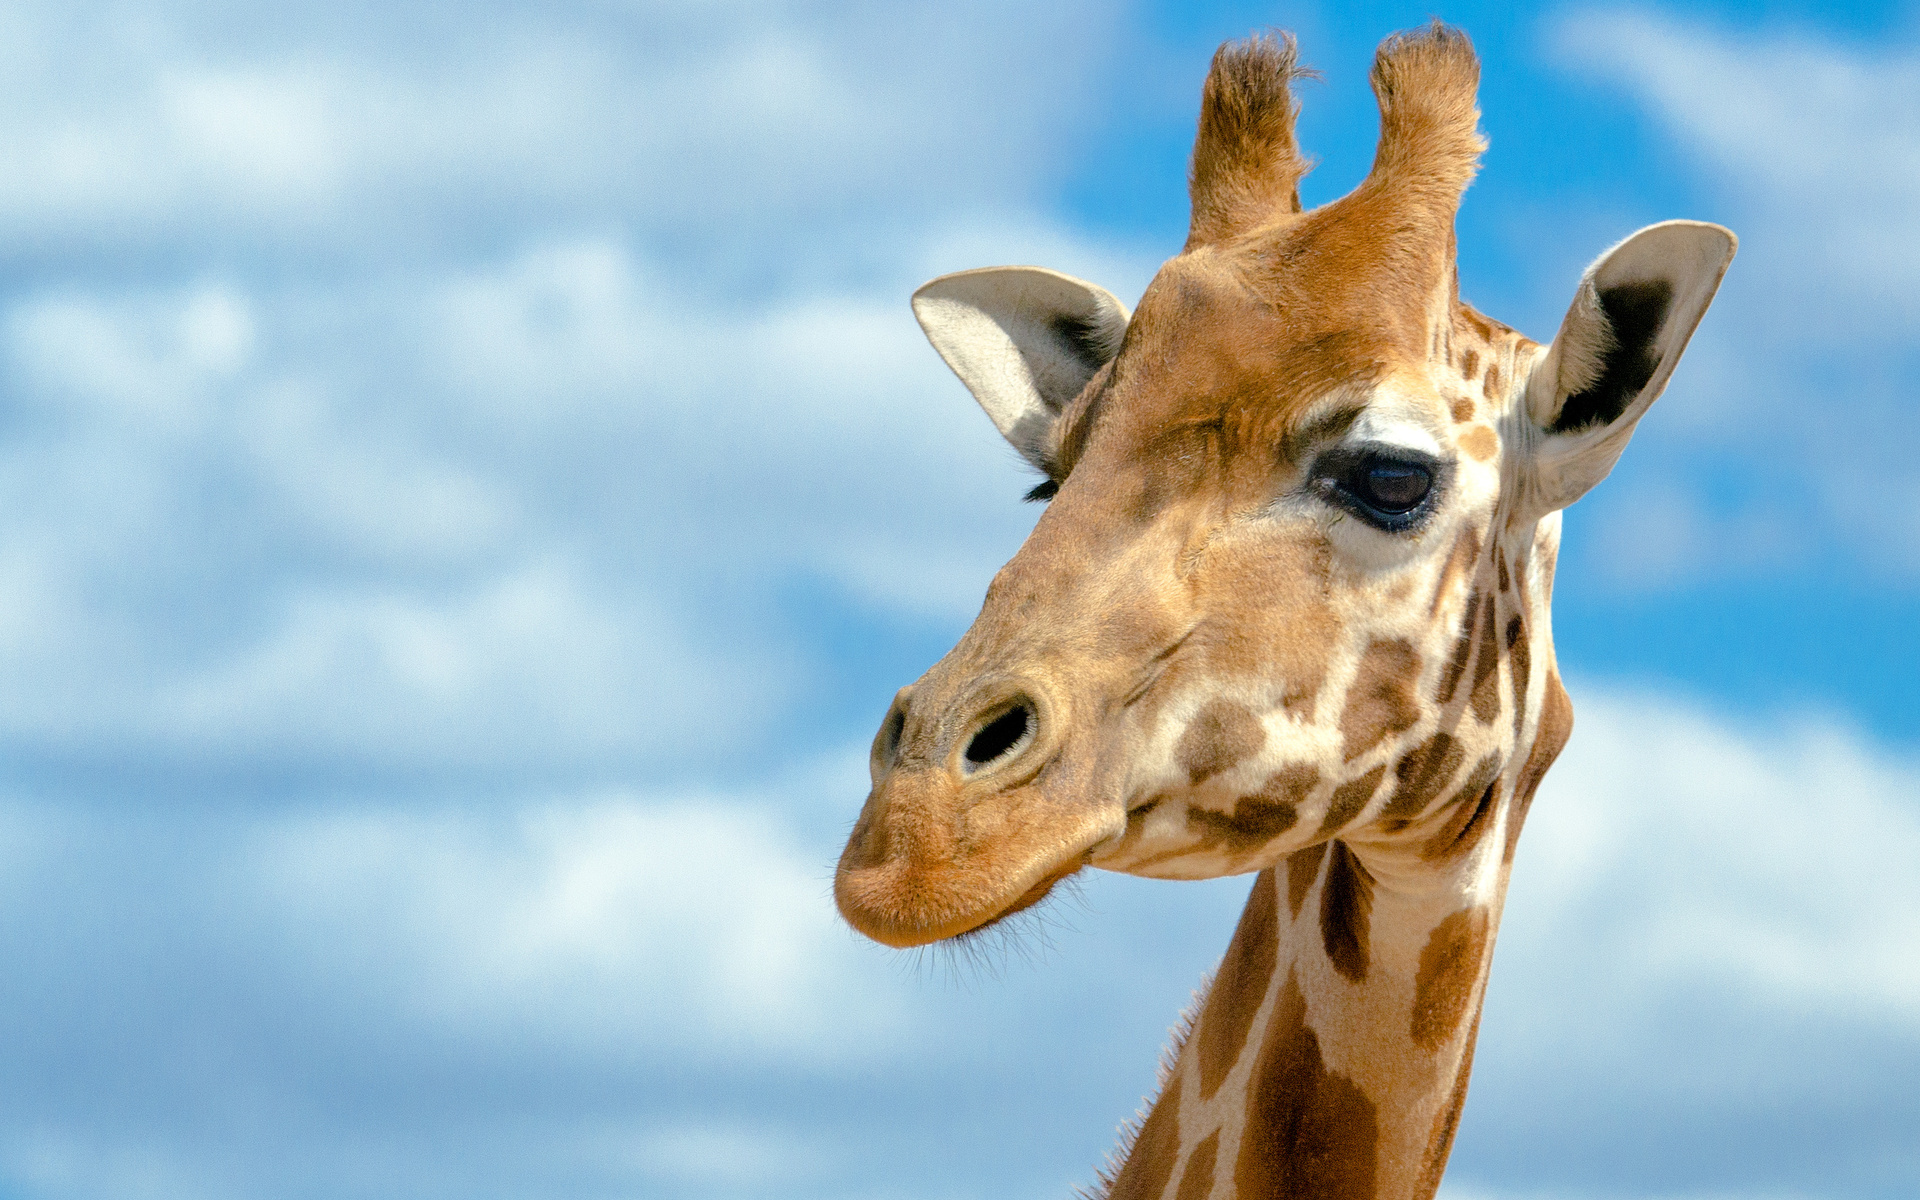 beautiful-colse-up-image-of-giraffe-free-download-best-desktop-background-hd-wid.jpg